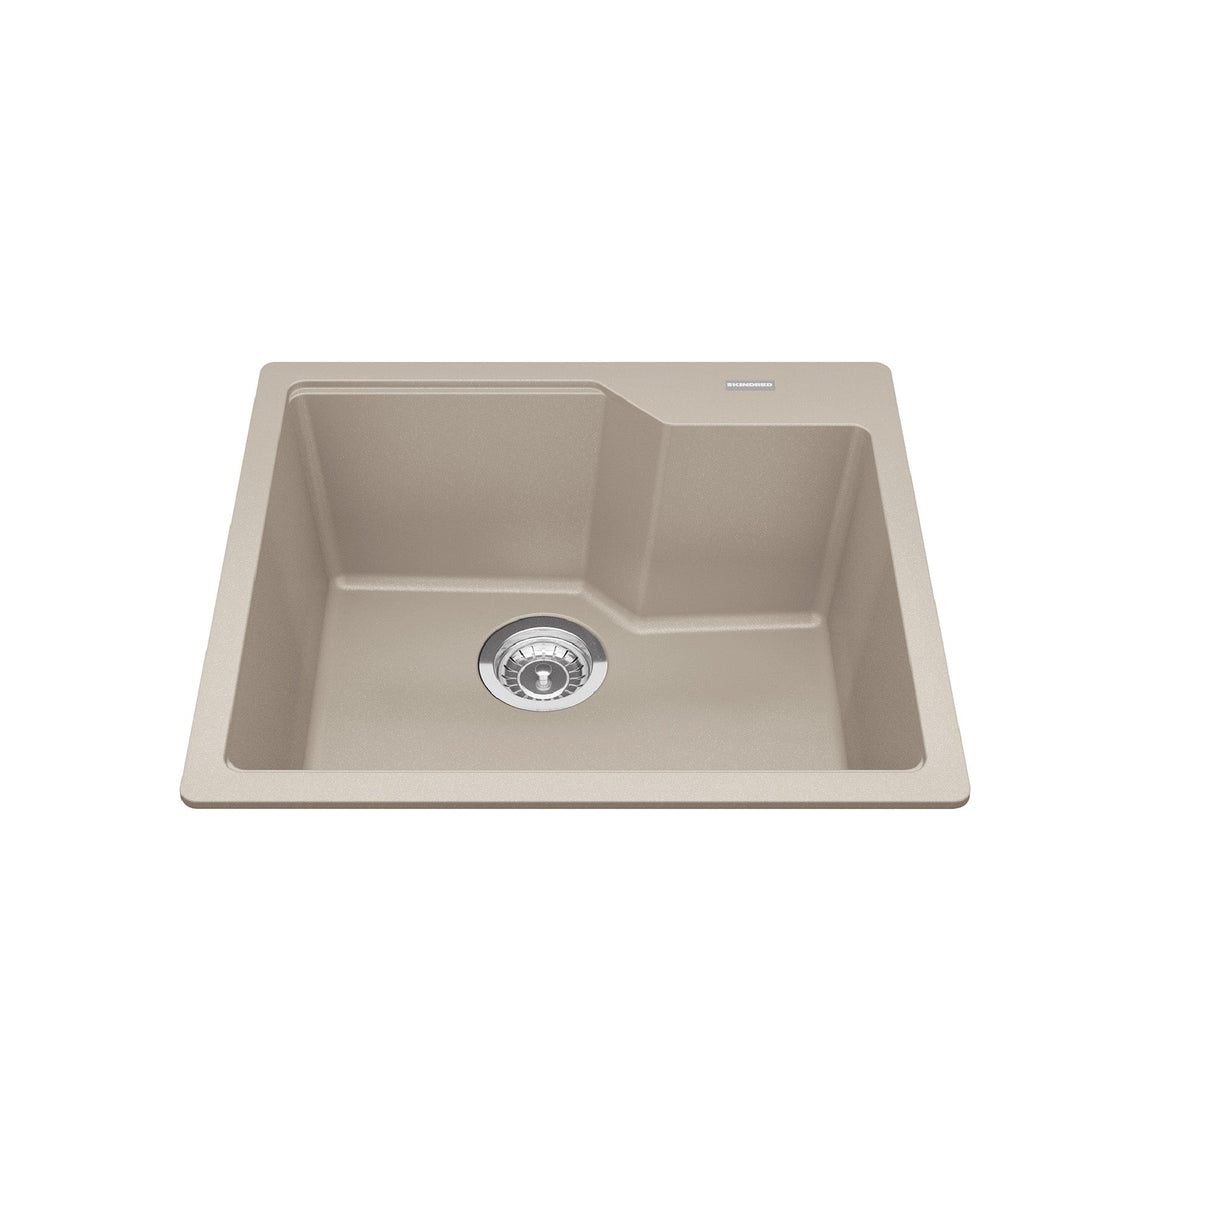 KINDRED MGSM2022-9CHAN Granite Series 22.06-in LR x 19.69-in FB x 9.06-in DP Drop In Single Bowl Granite Kitchen Sink In Champagne